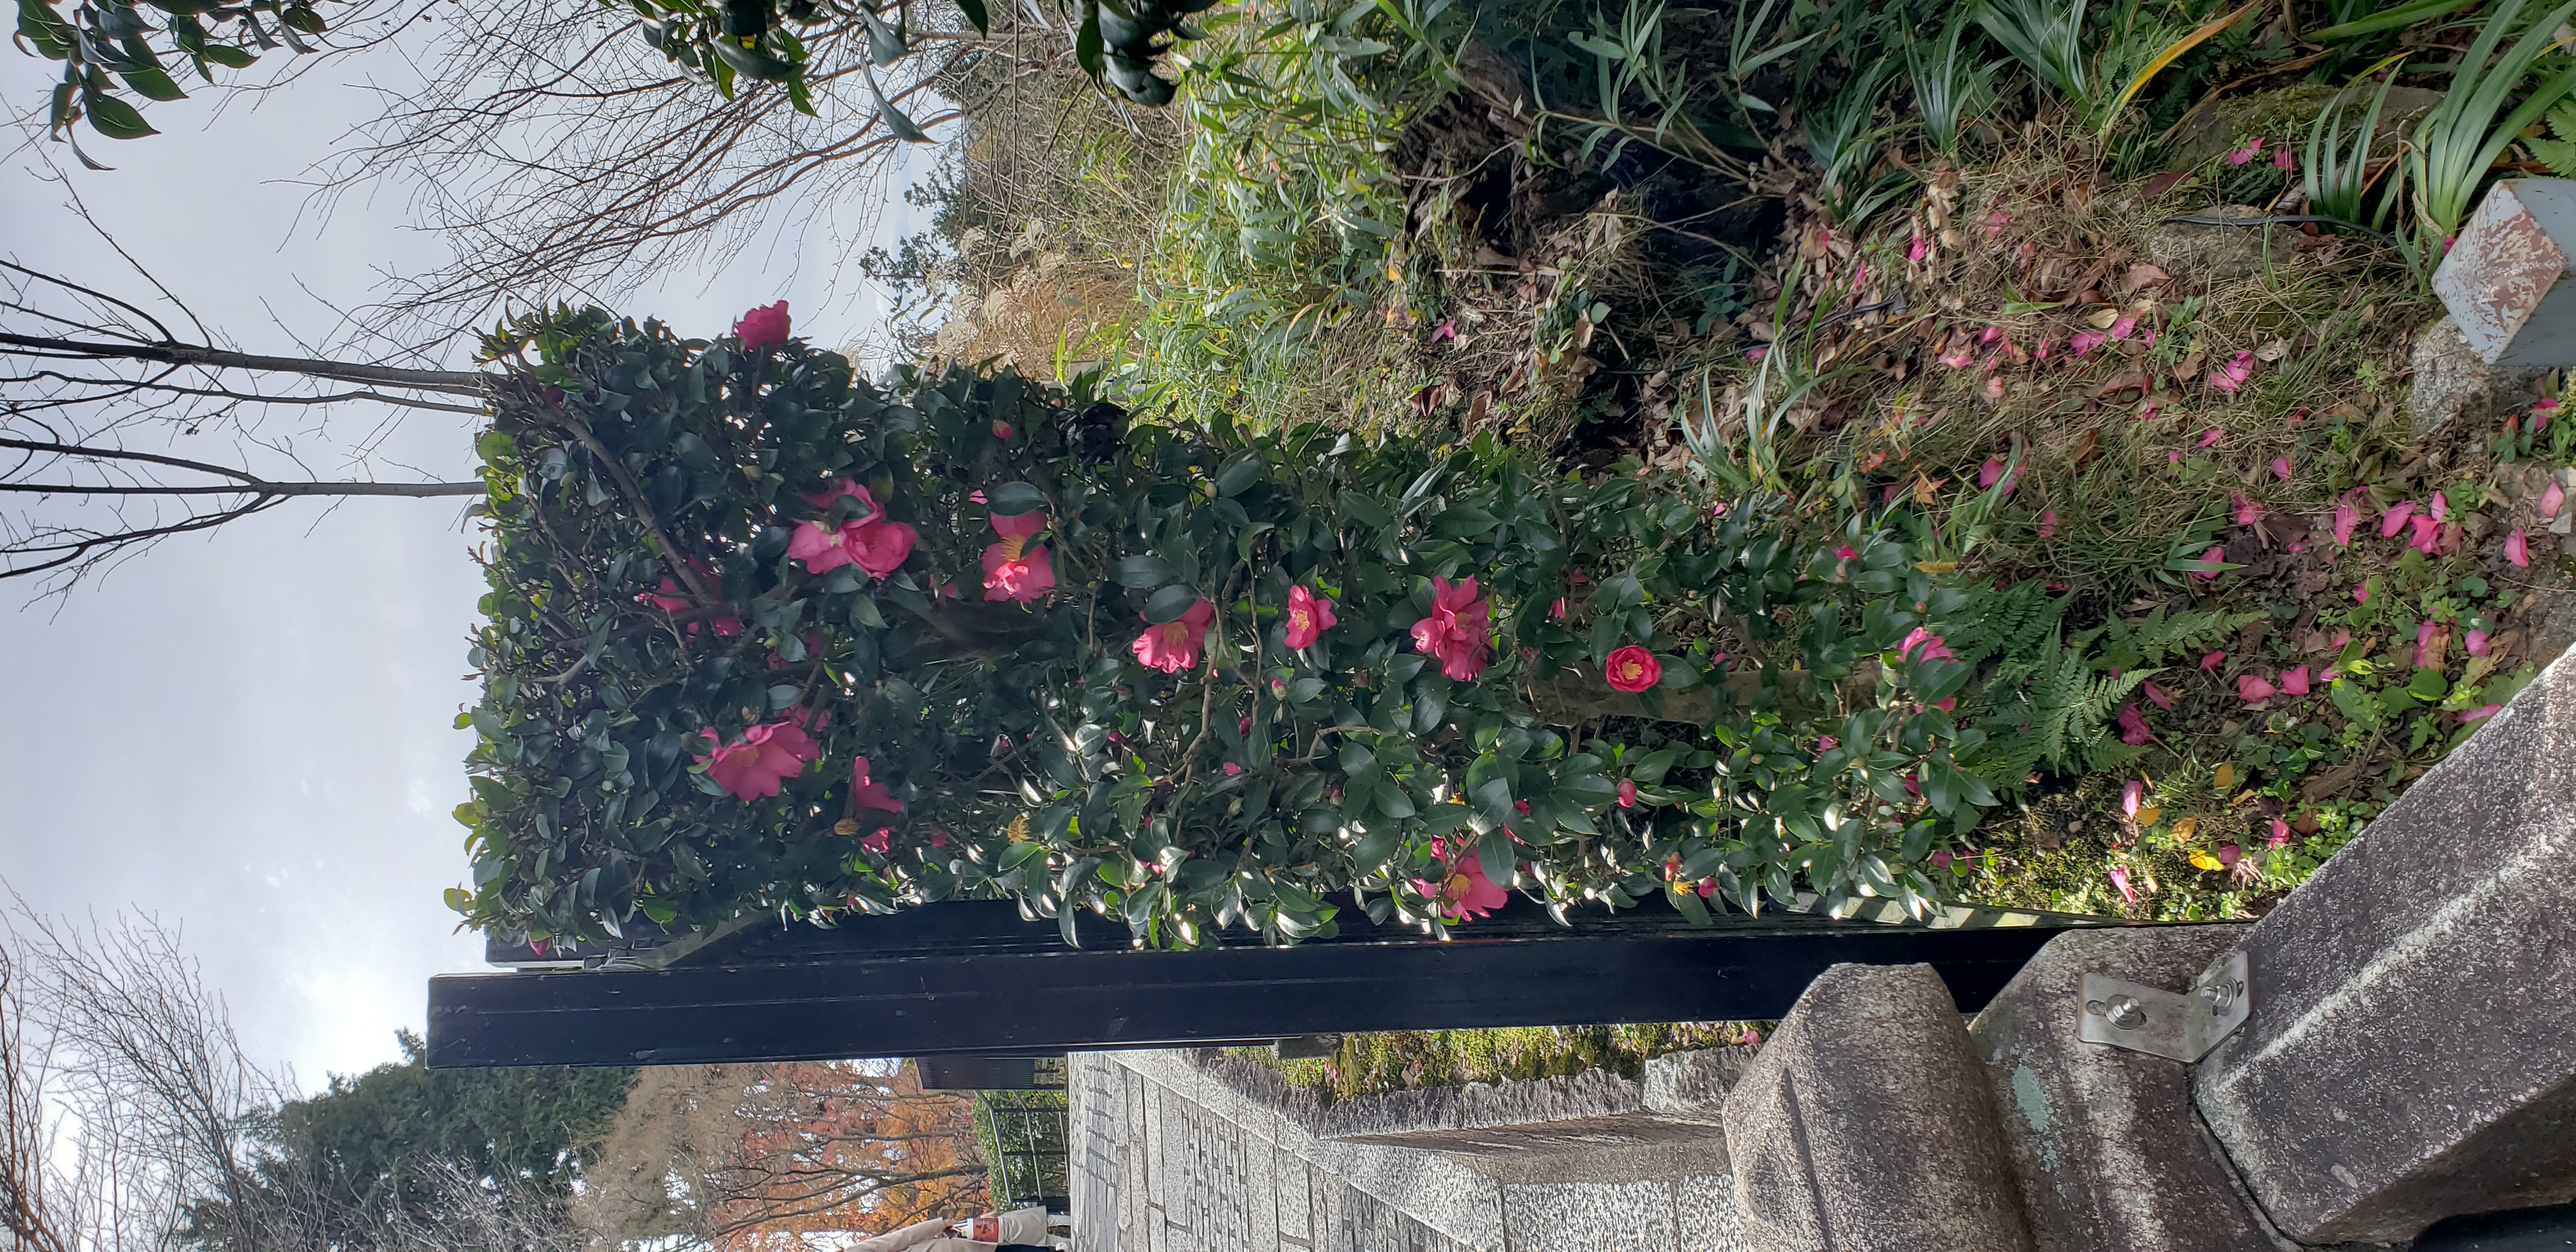 Camellia sasanqua plantplacesimage20181209_104516.jpg